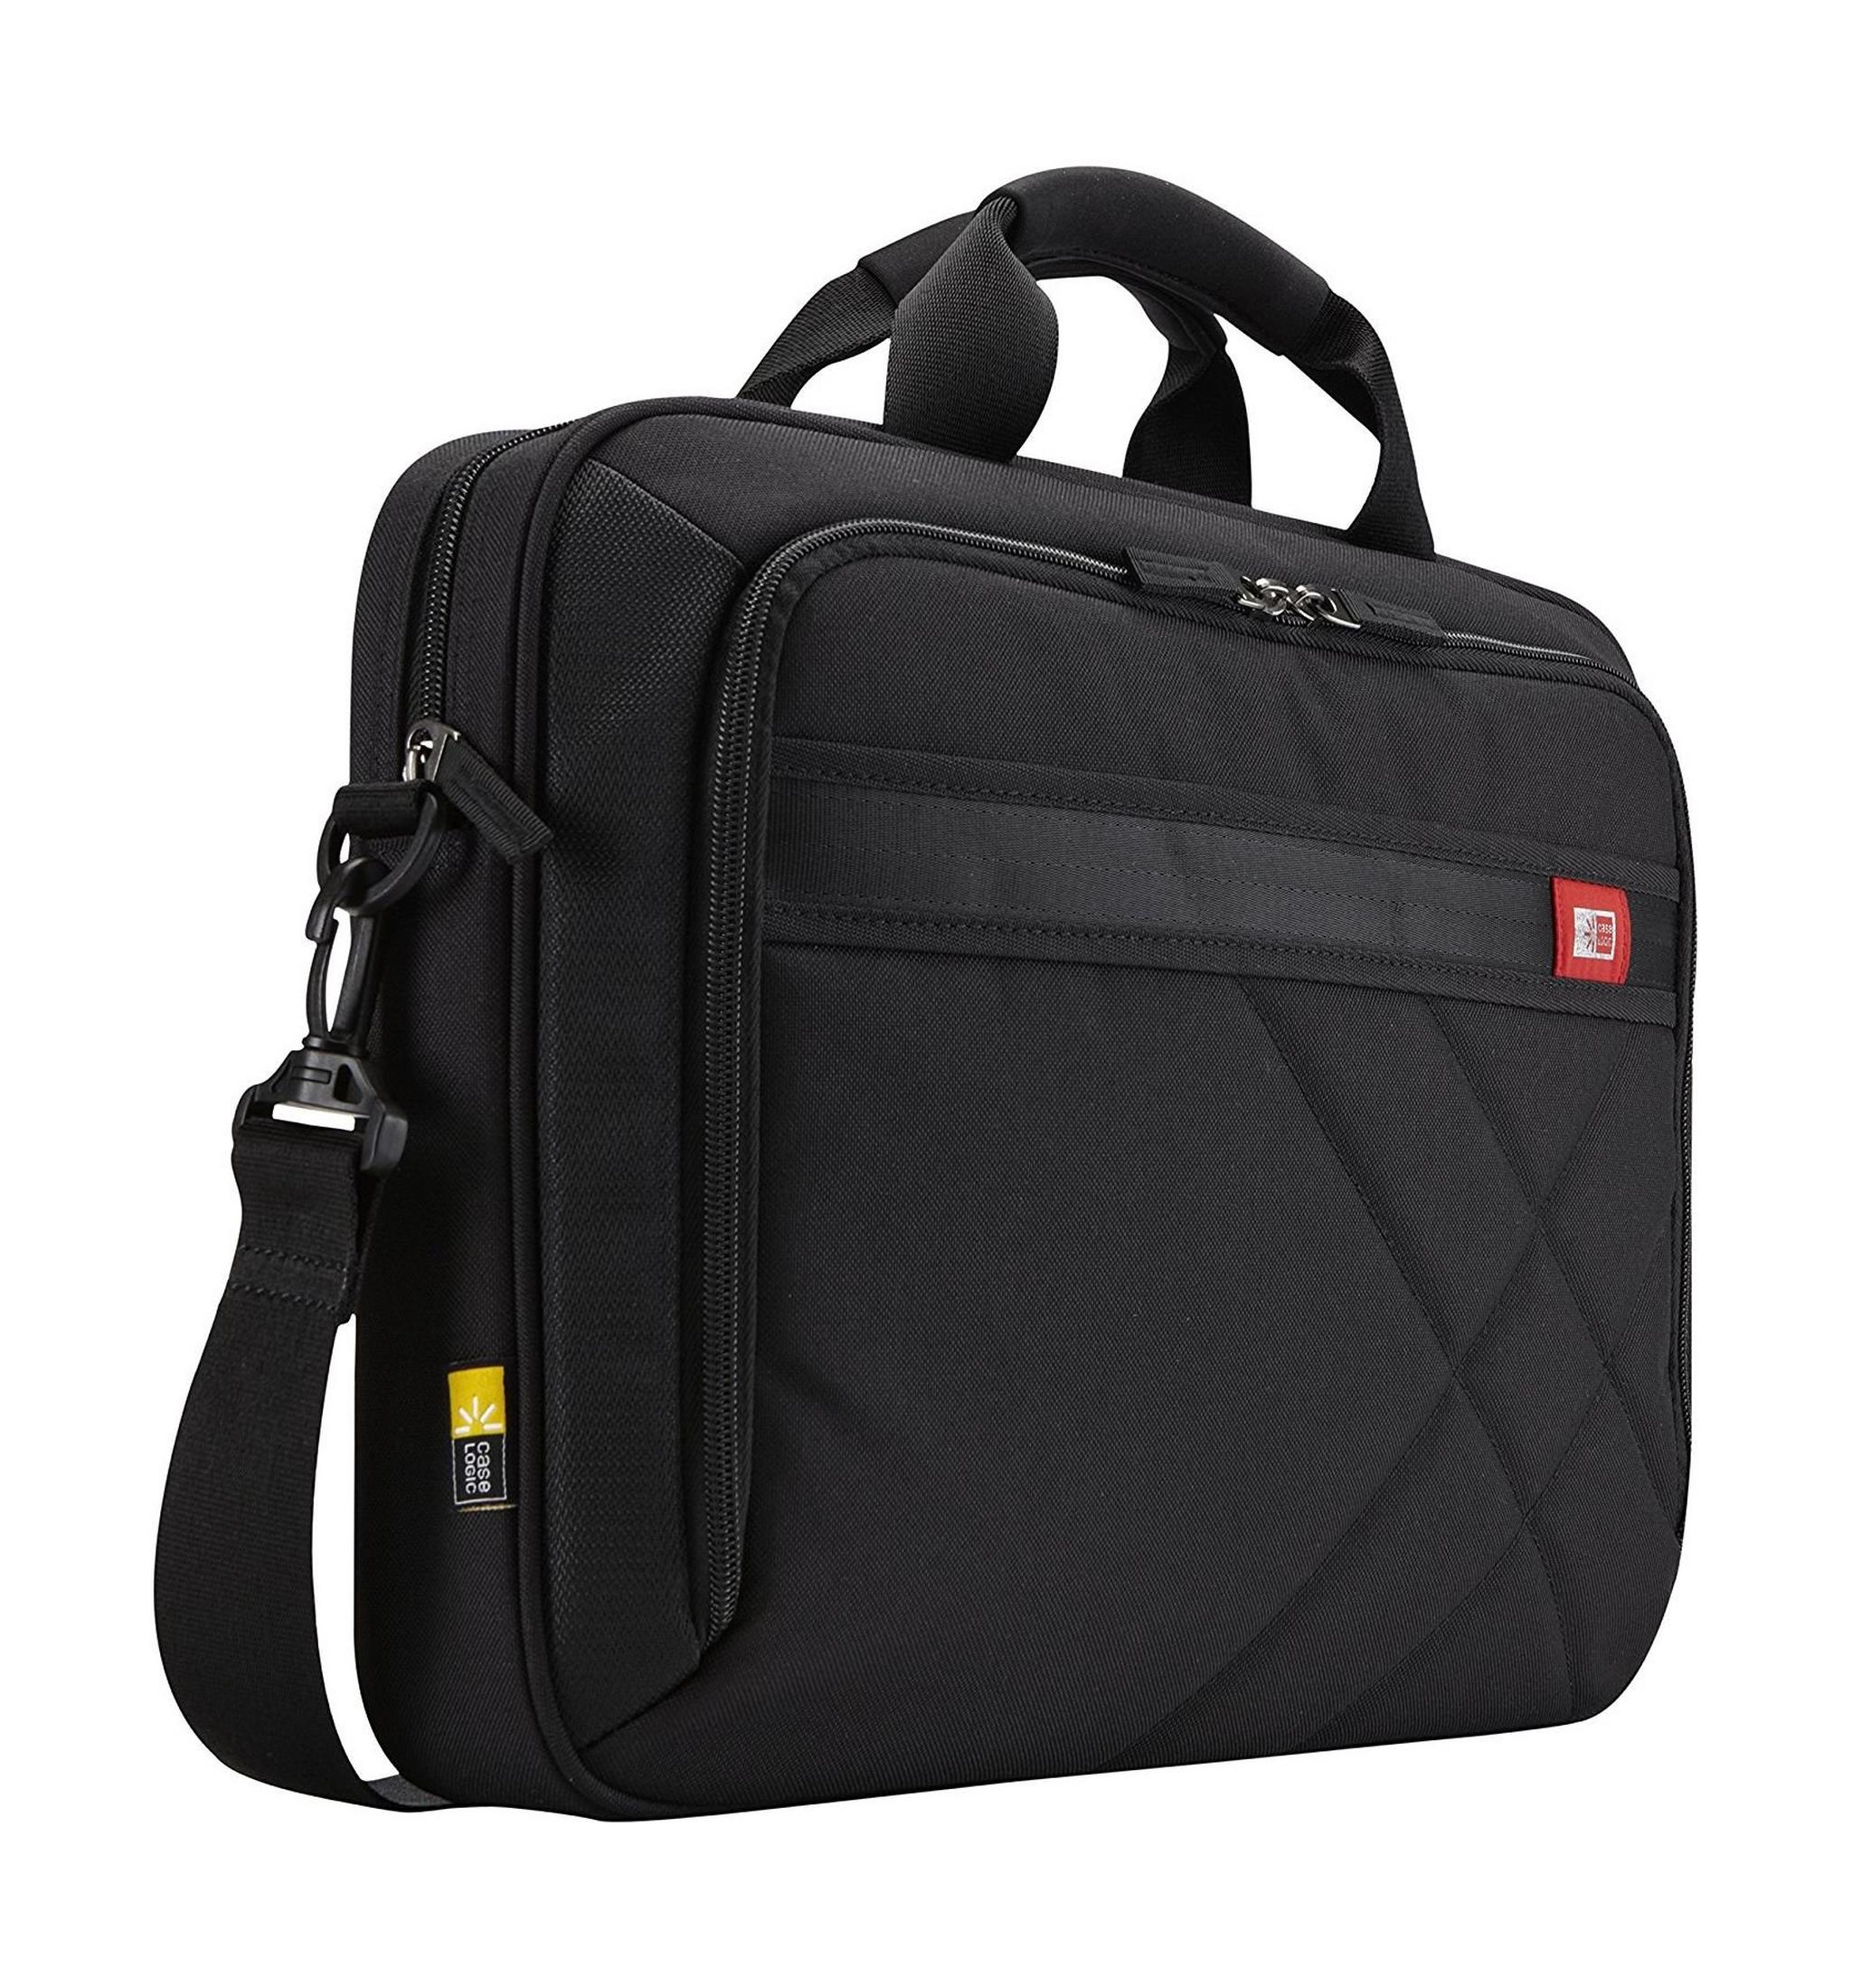 Case Logic 15.6-Inch Laptop and Tablet Briefcase - Black (DLC-115)